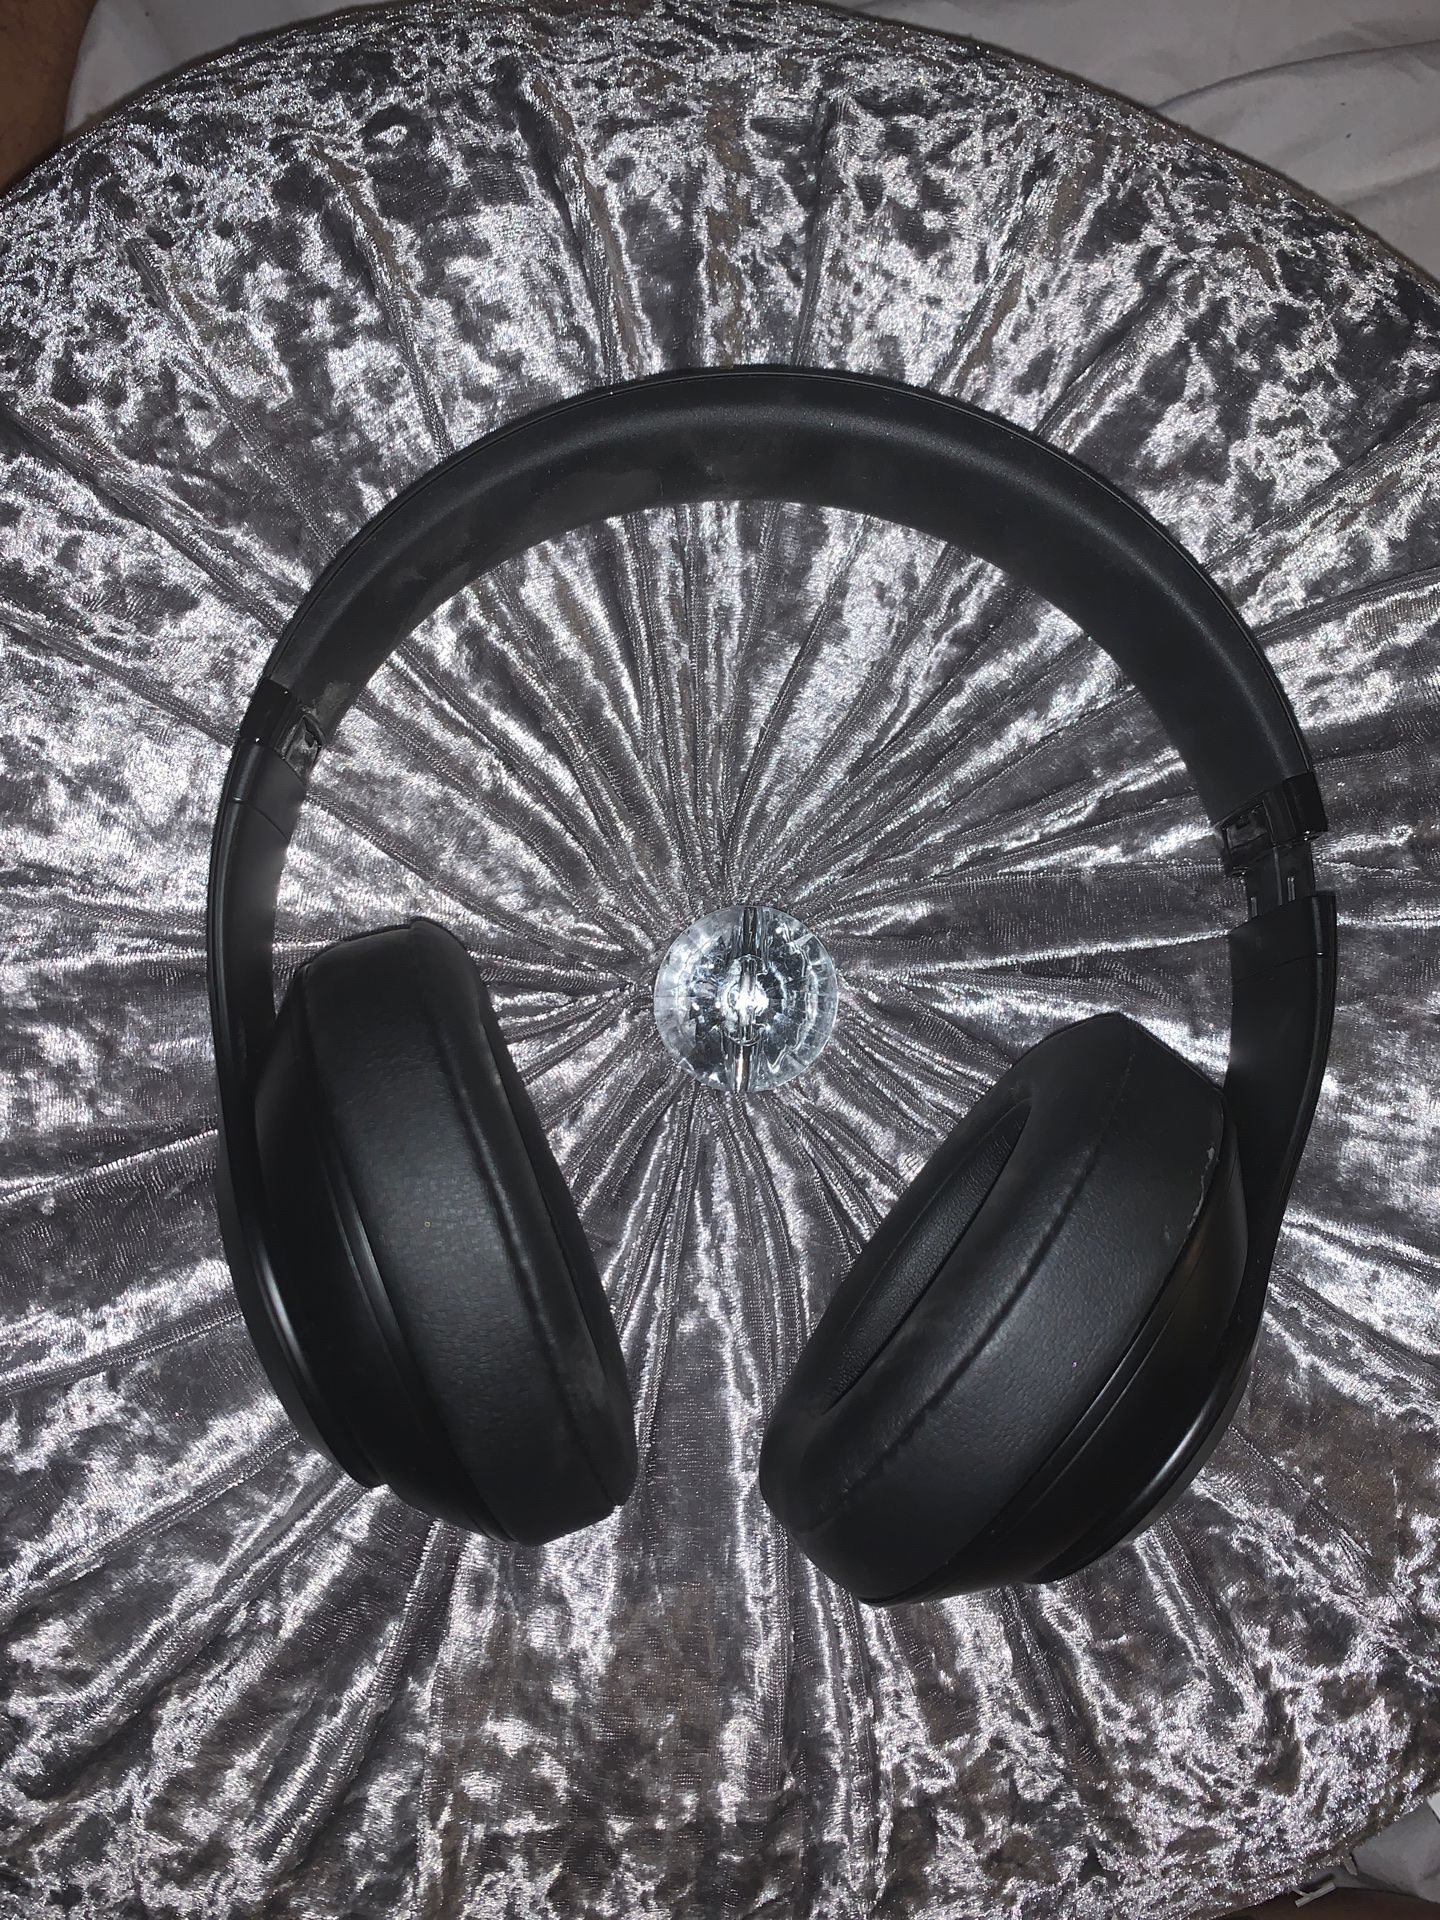 Beats headphones 🎧 wireless studio 3 with USB cord used $145